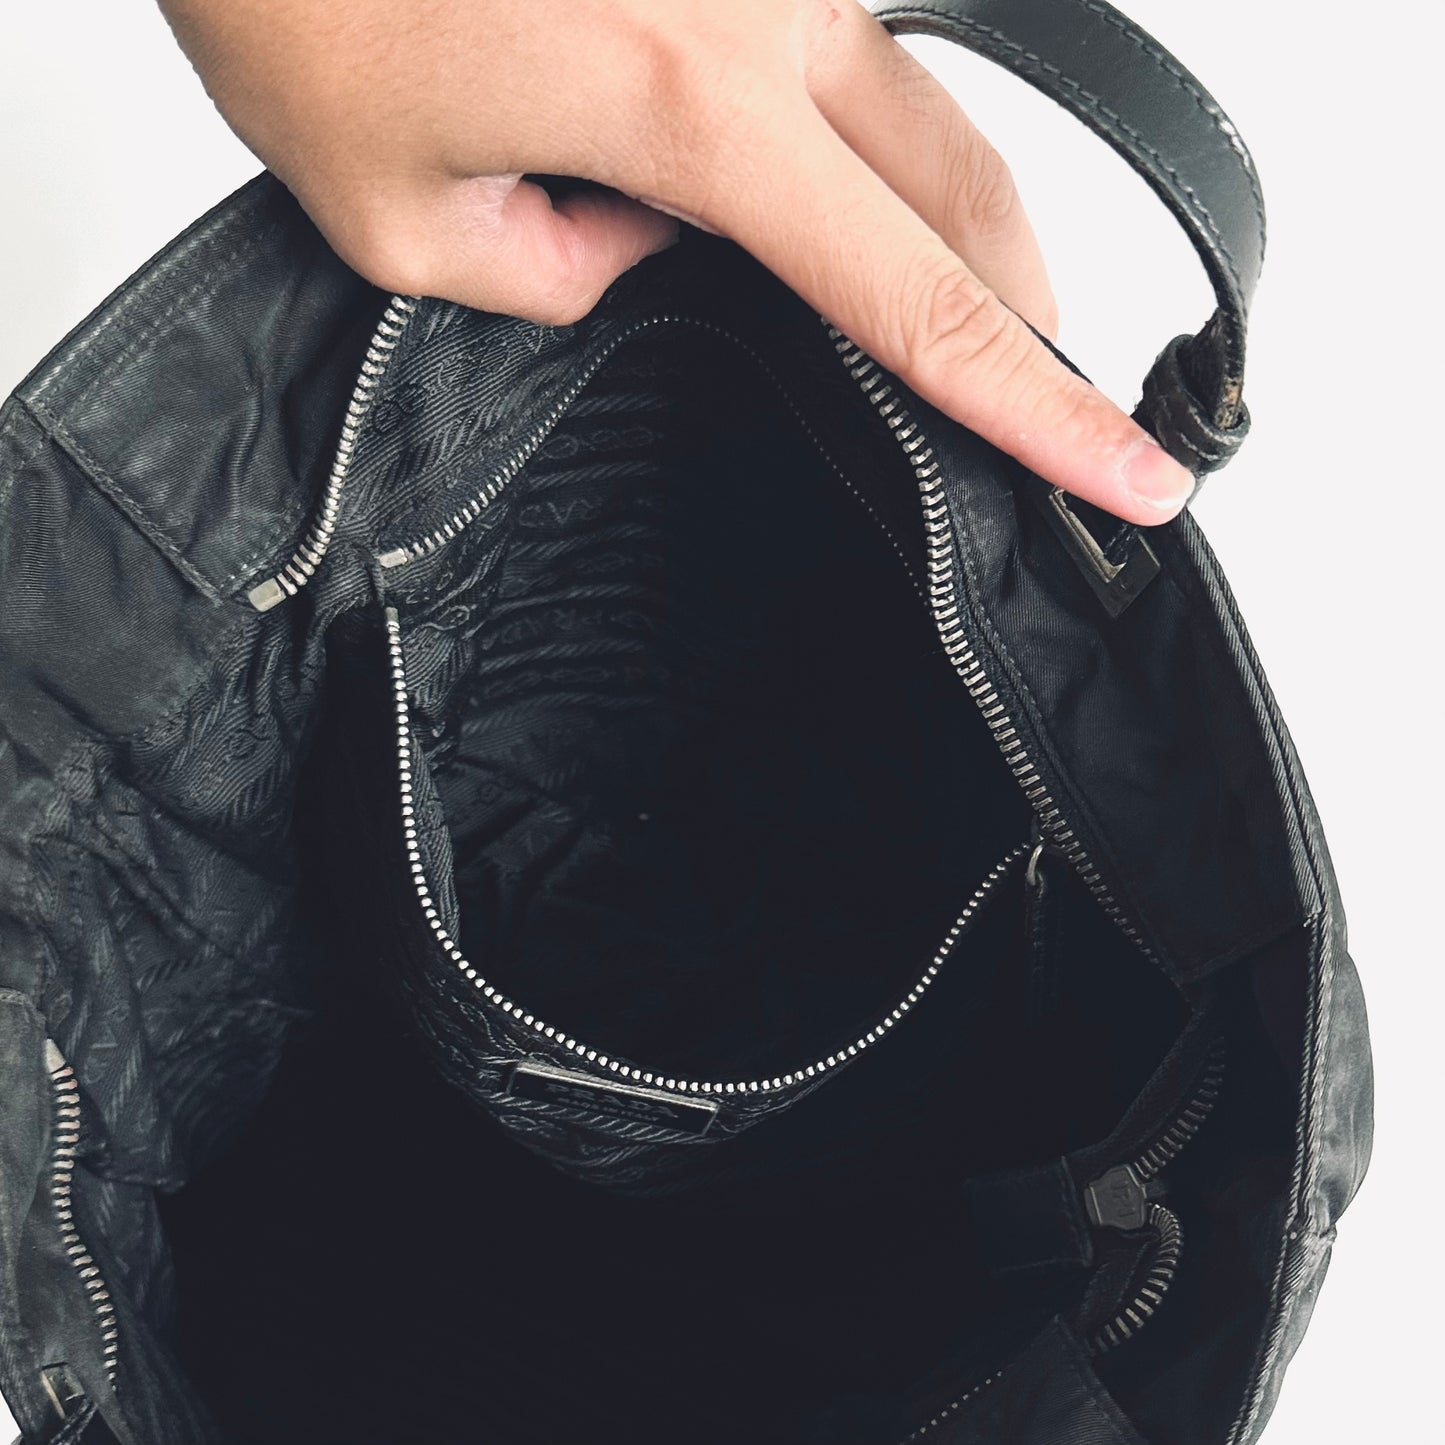 Prada Black Acciaio Tessuto Logo Classic Nylon & Leather Shopper Shoulder Tote Bag